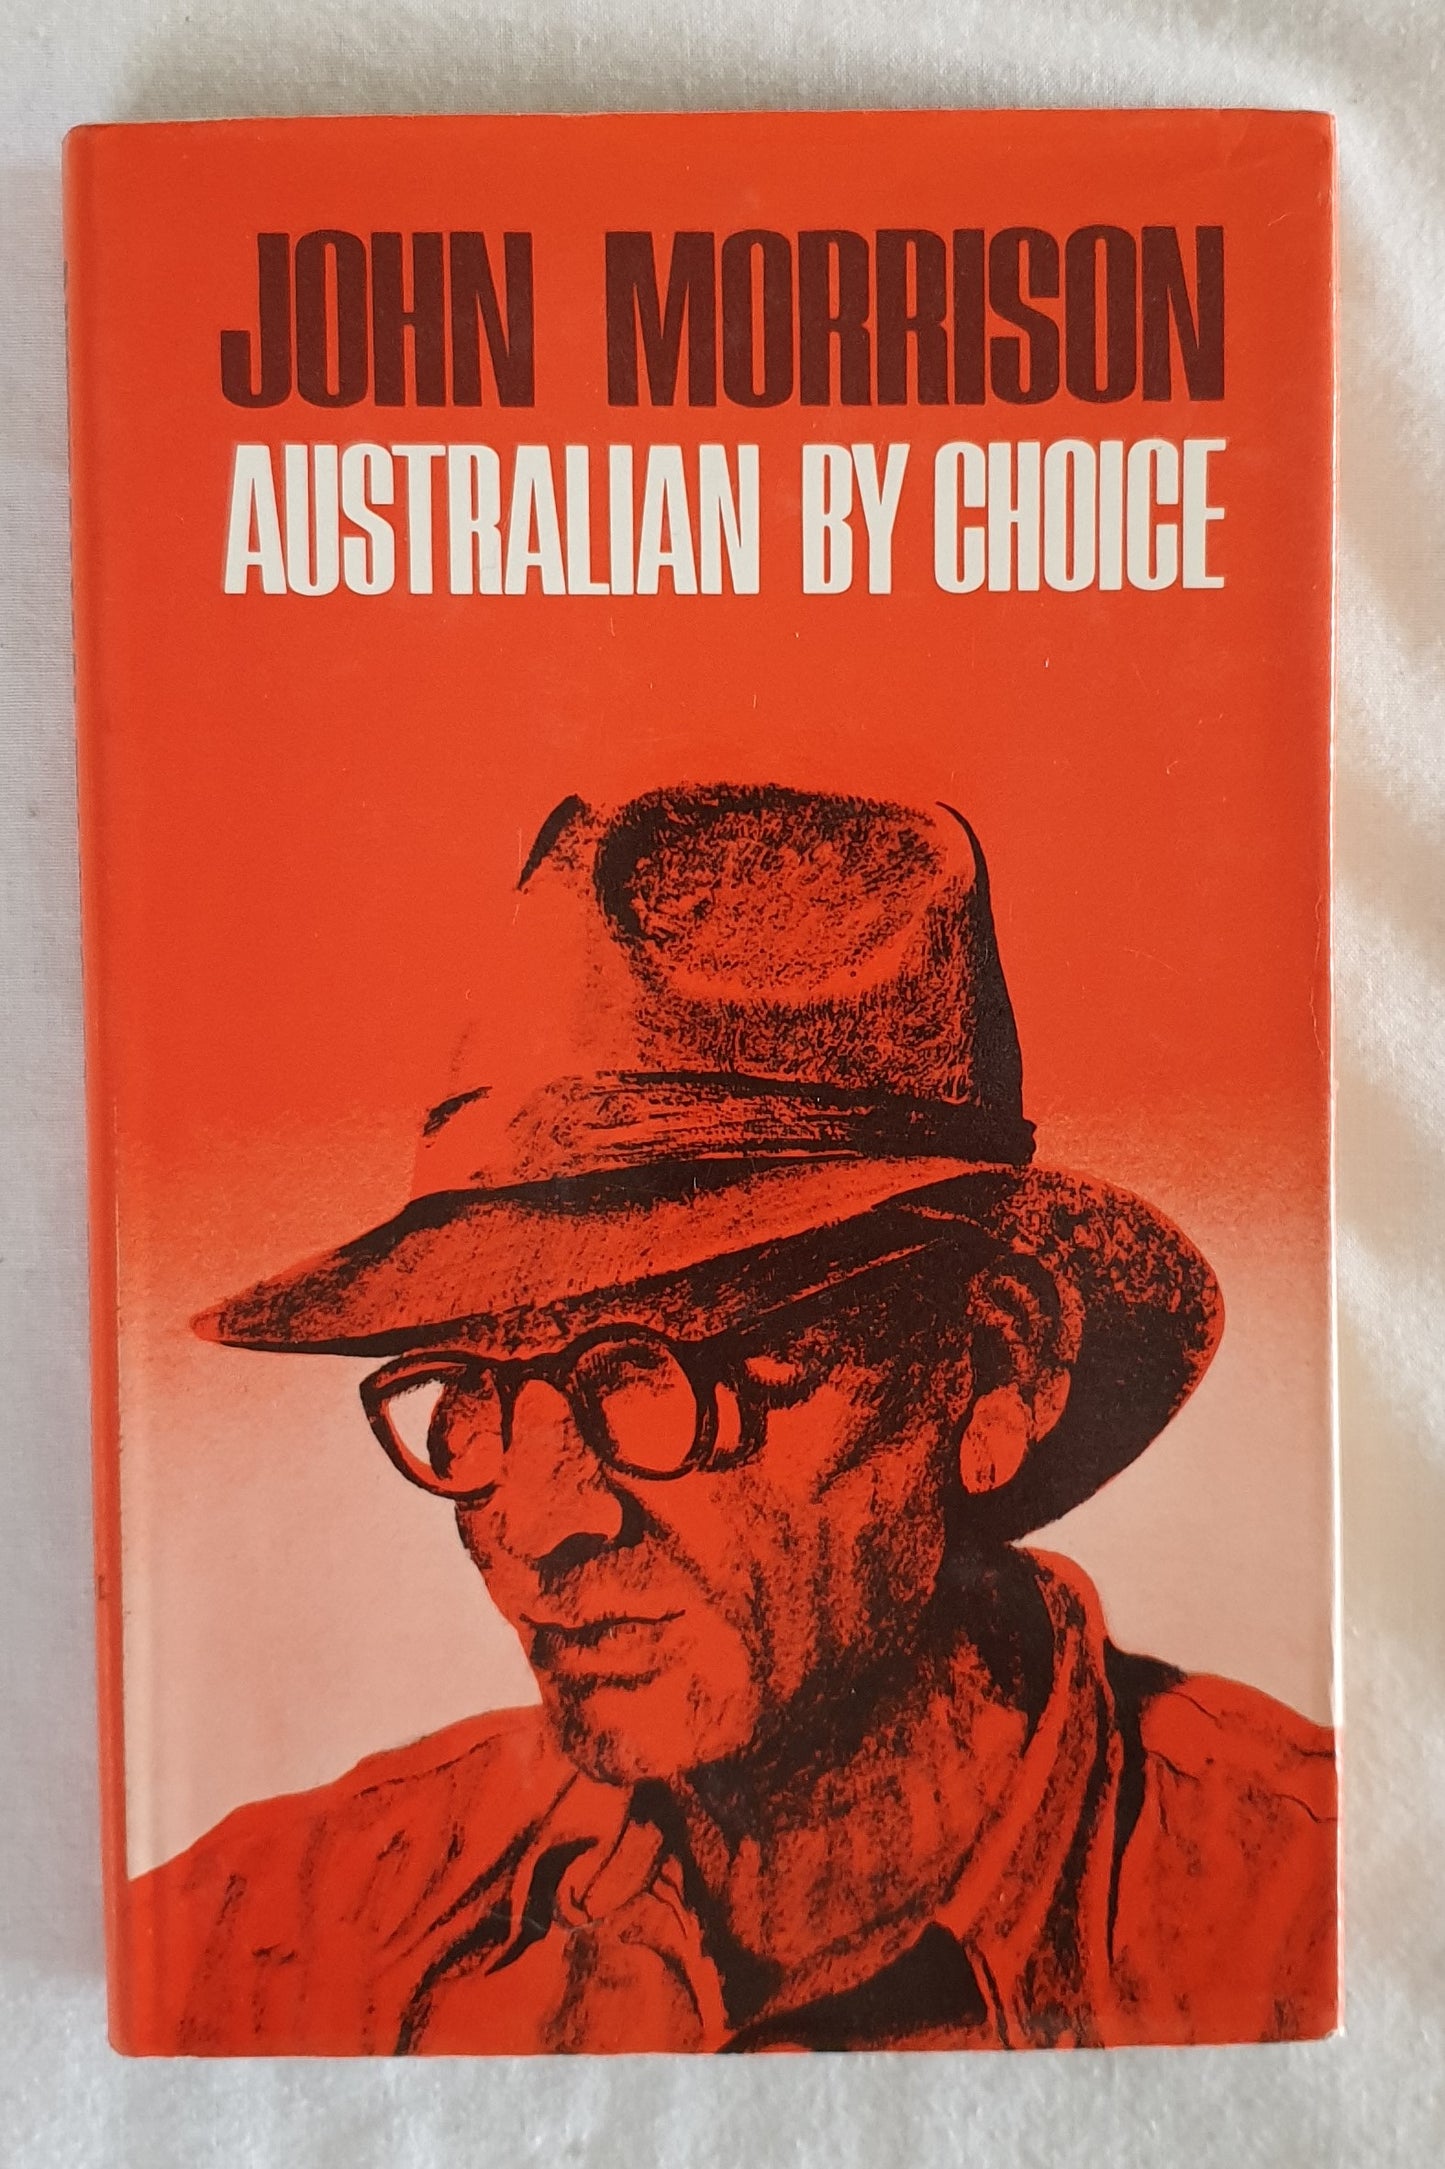 Australian By Choice by John Morrison